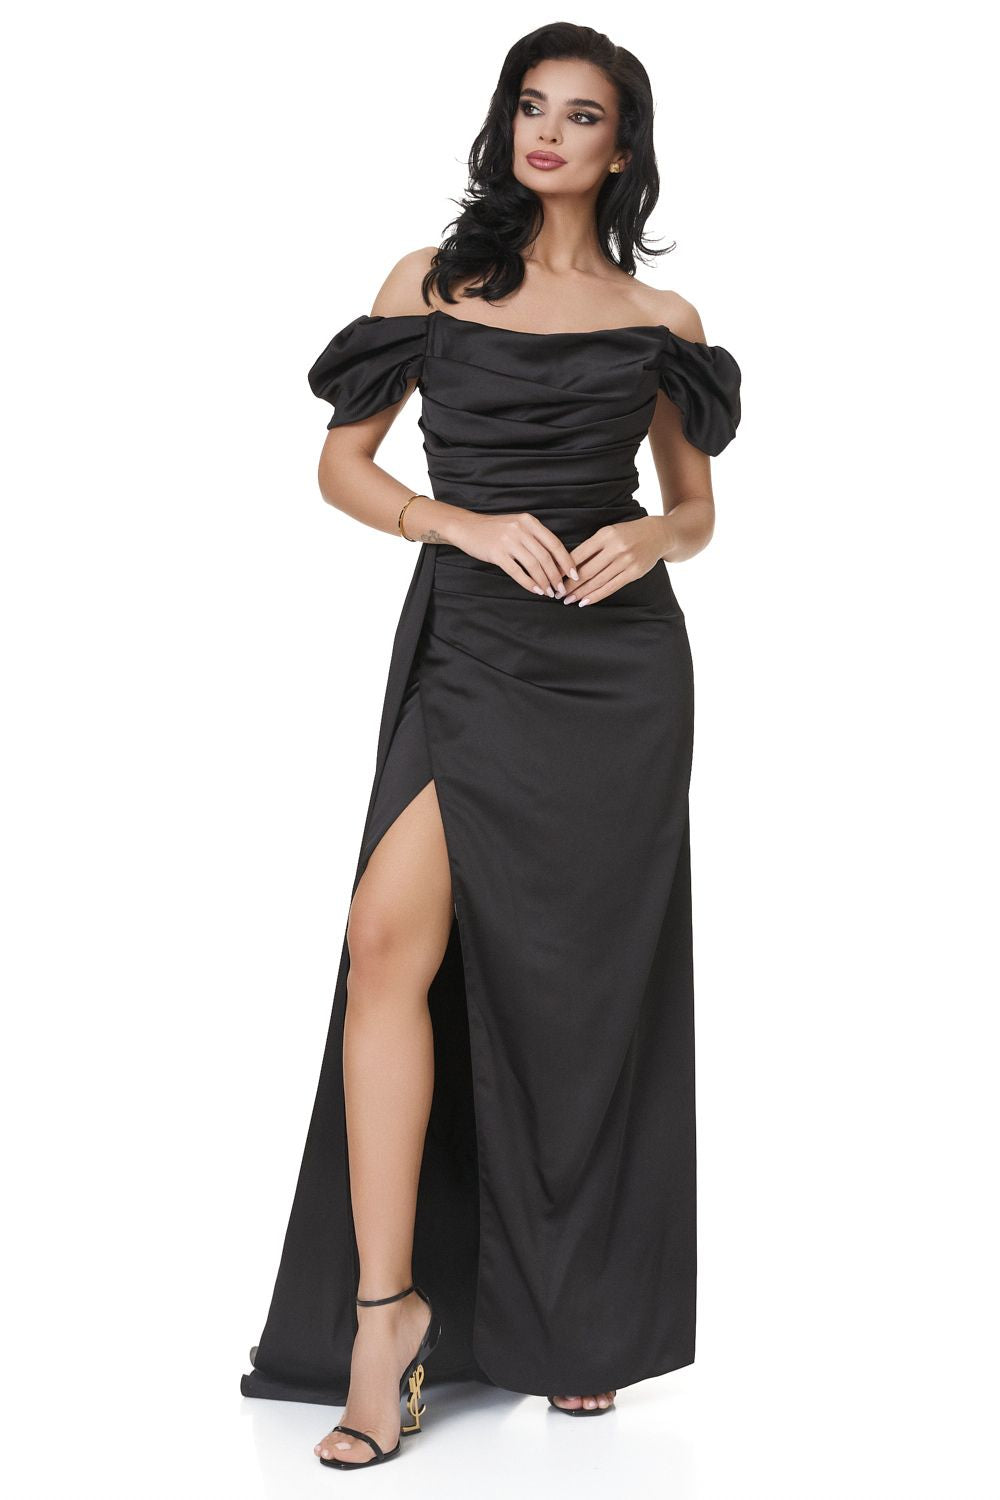 Serminisia Bogas long black dress for women